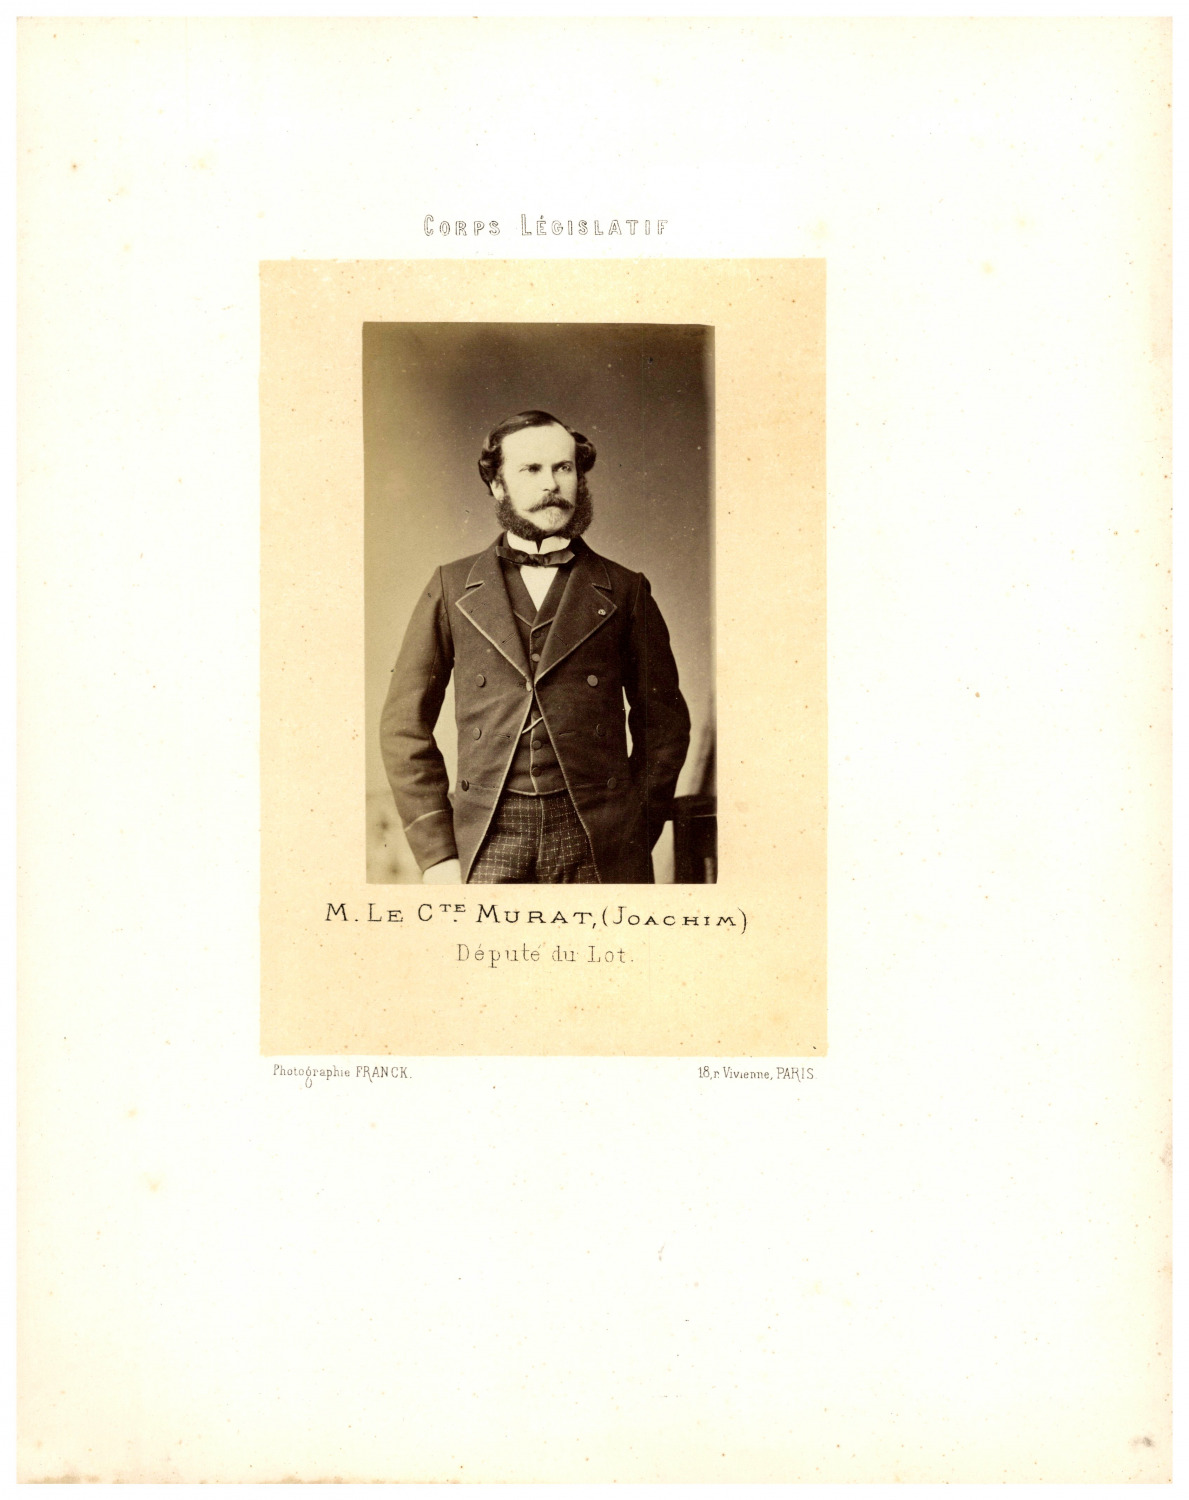 Mr. le Comte Murat (Joachim), Member of Parliament for the Vintage Print Lot, period print, 